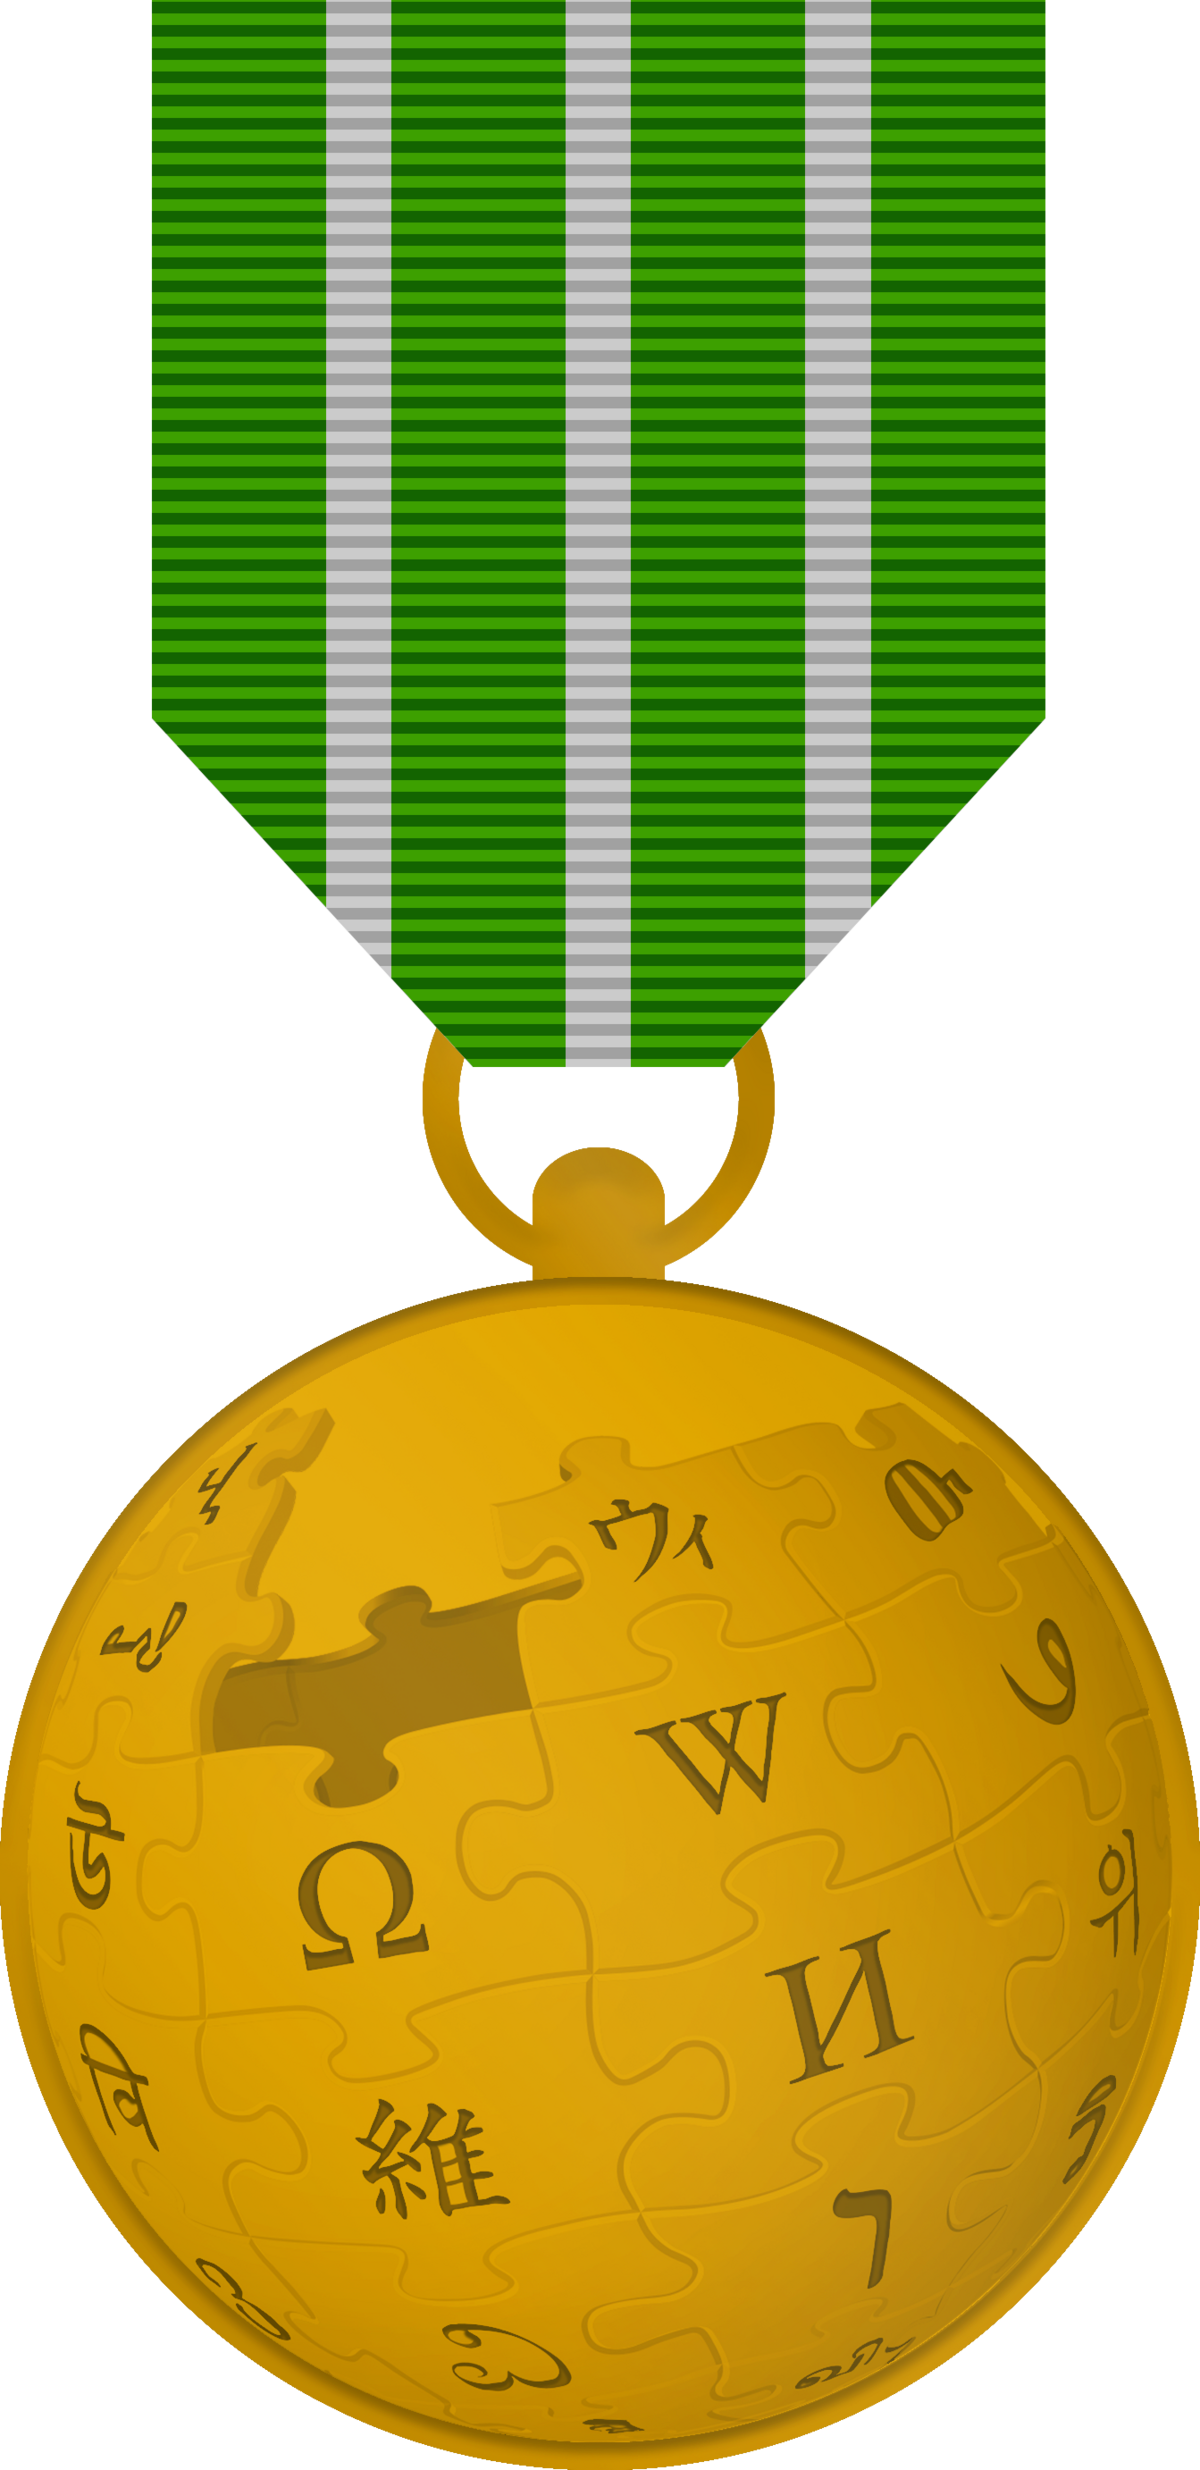 Medal - Wikipedia